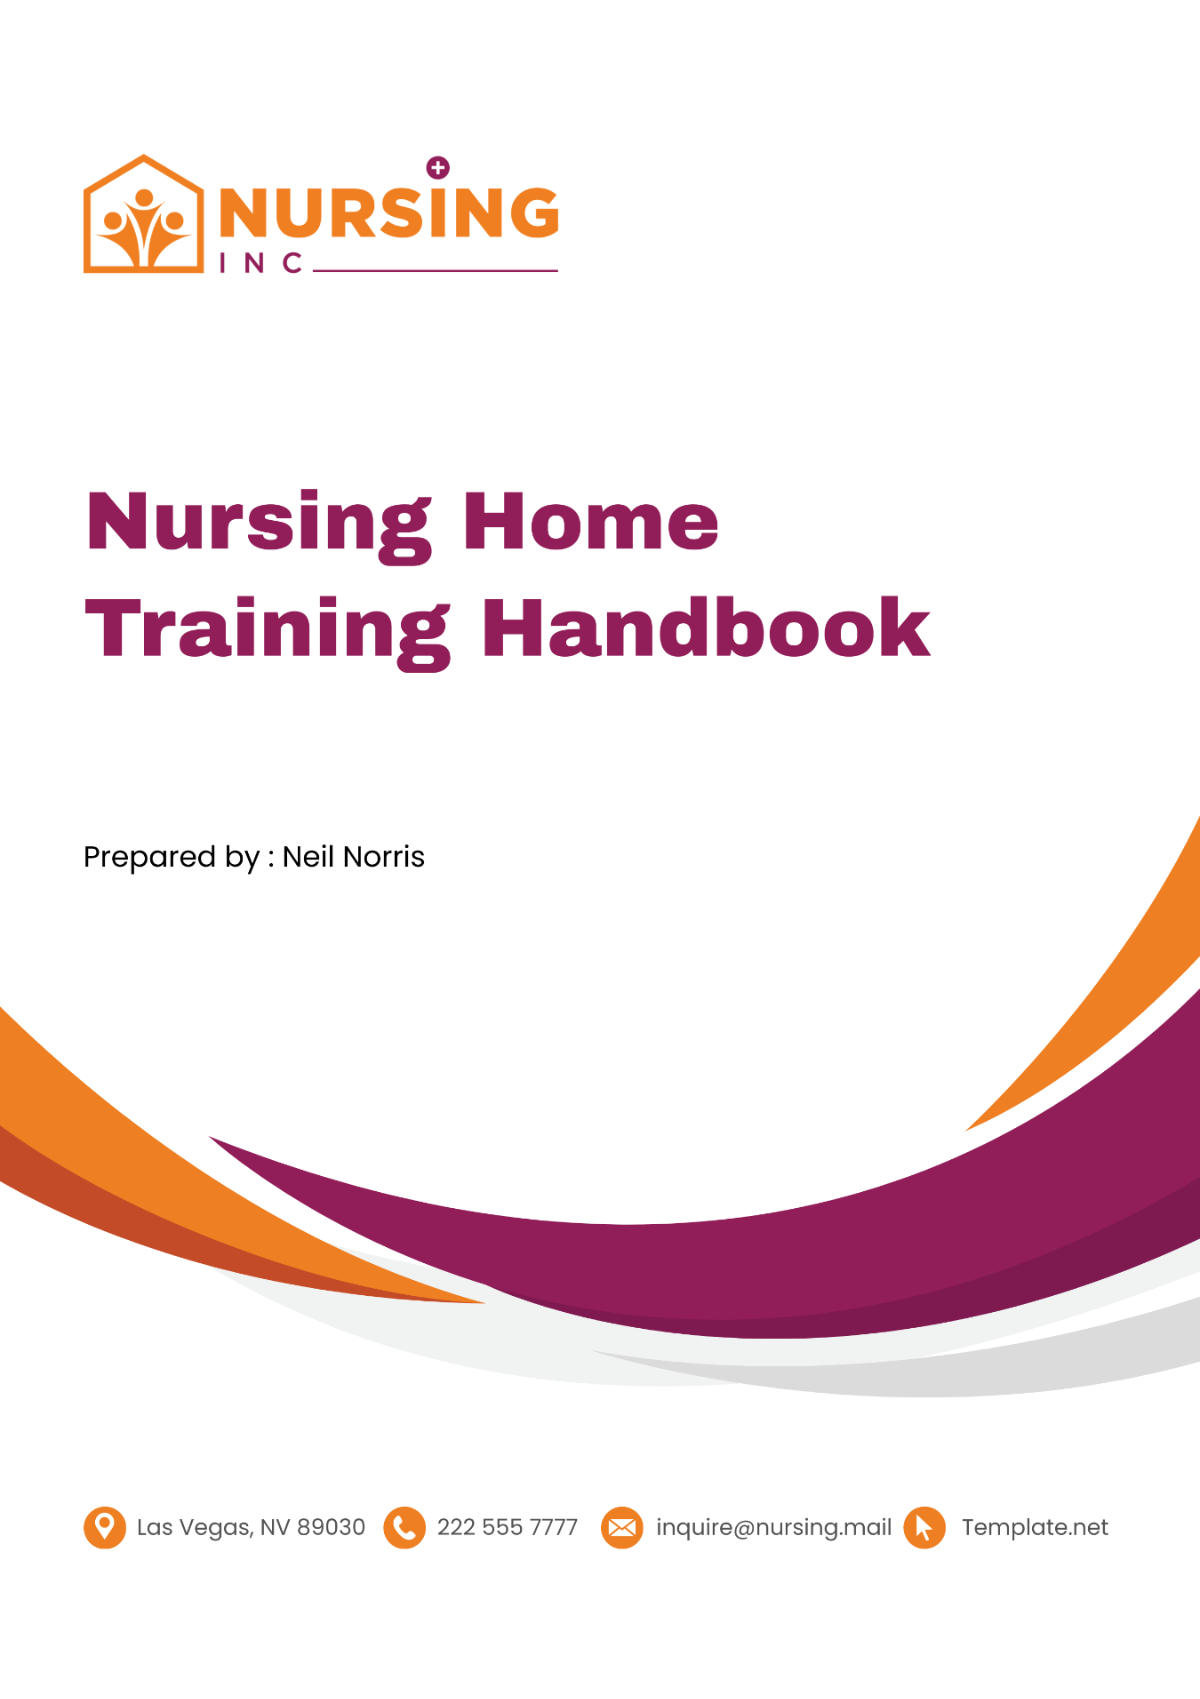 Nursing Home Training Handbook Template